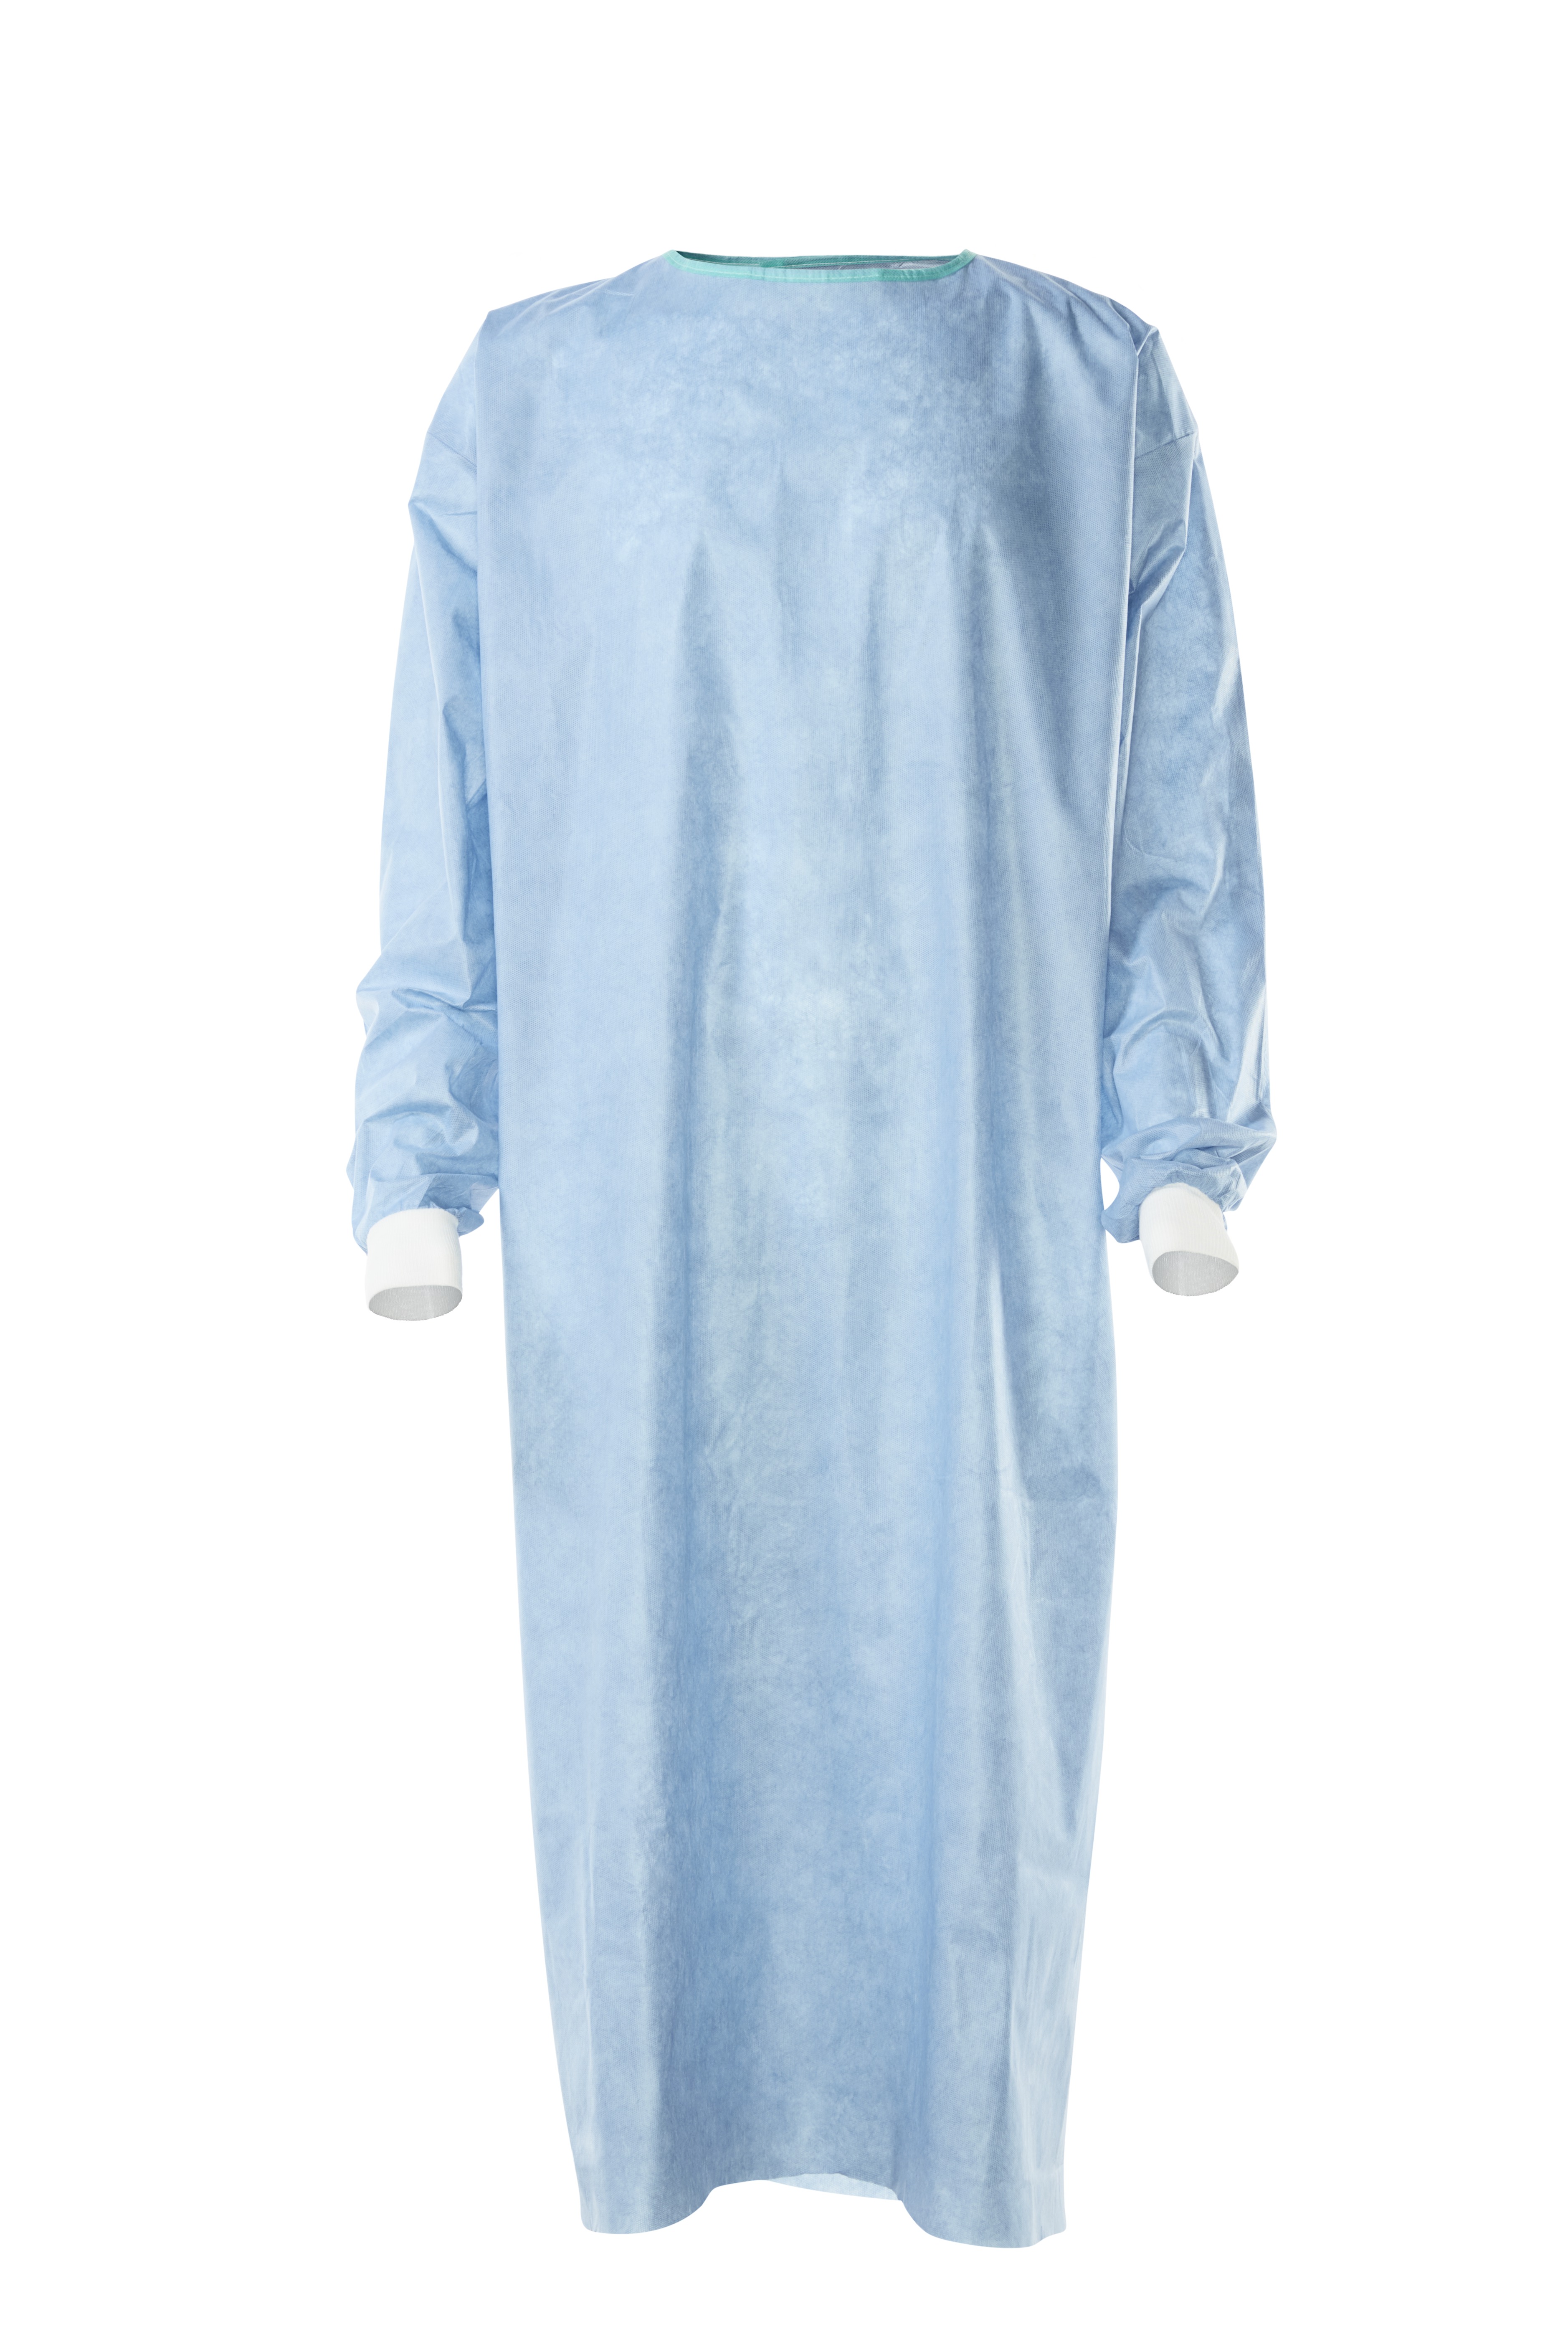 Foliodress gown Protect Basic OP-Mantel, Gr. L, steril, blau, 1 Stck.